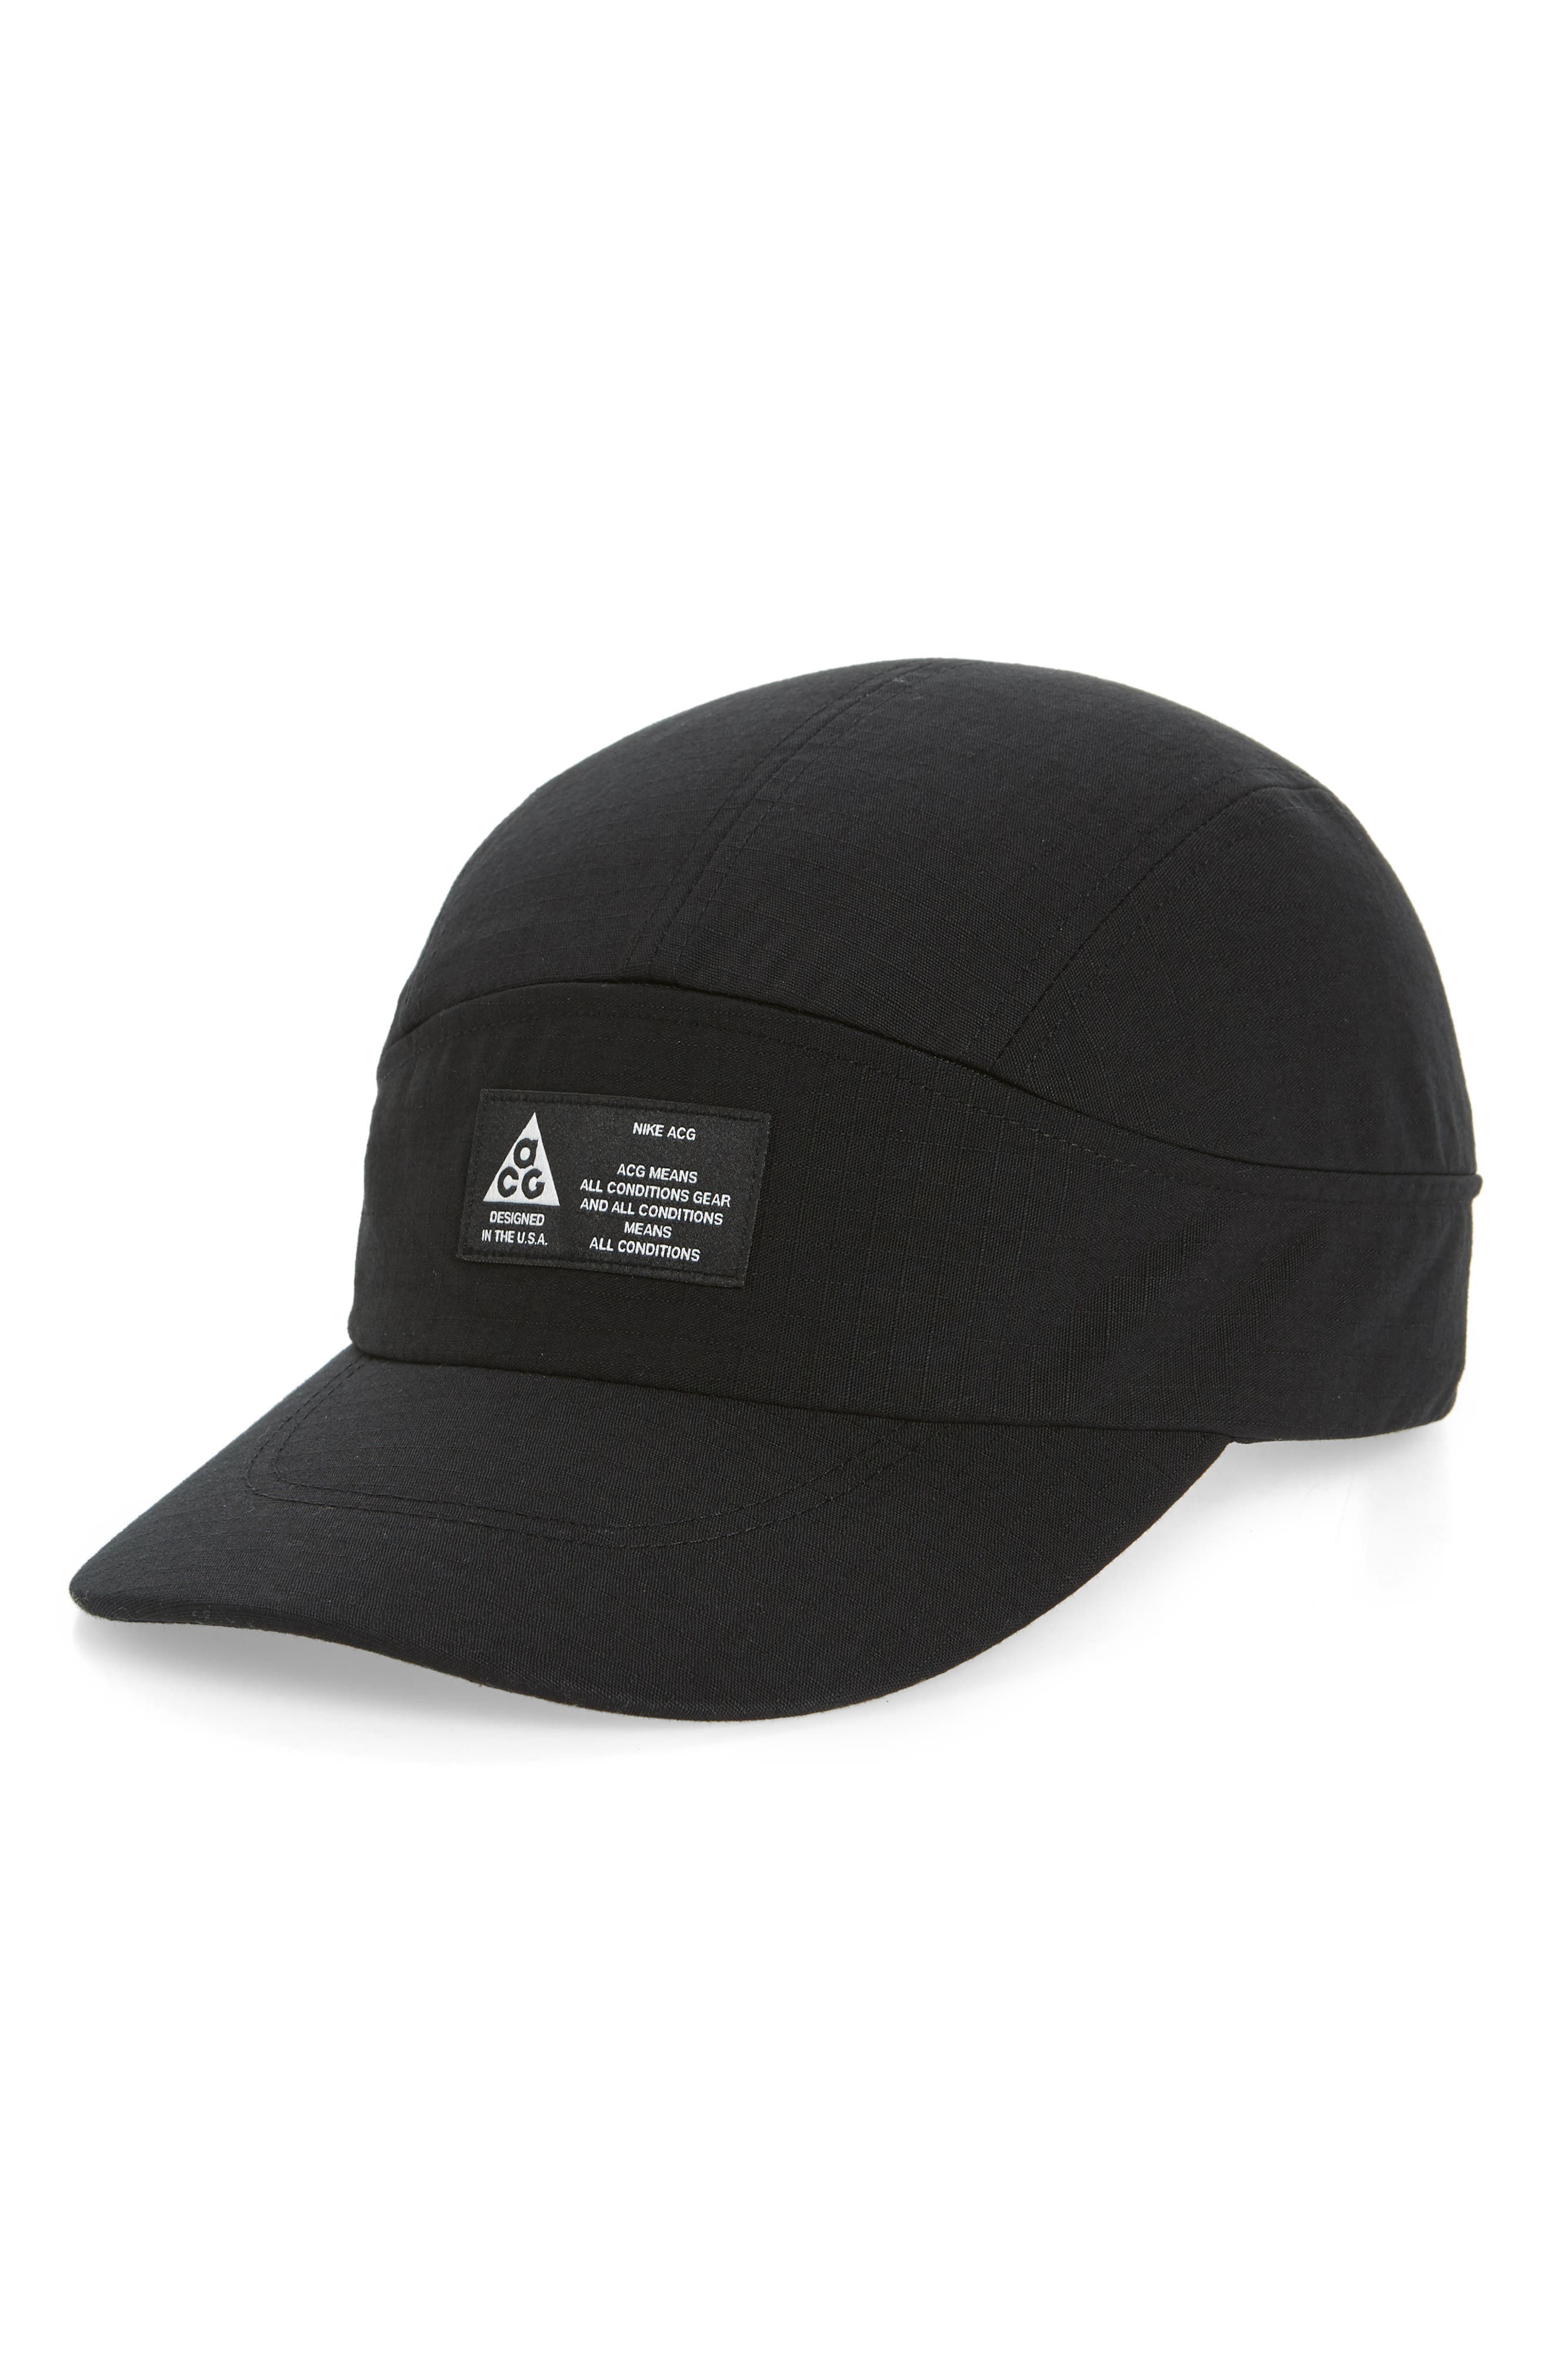 acg tailwind visor cap